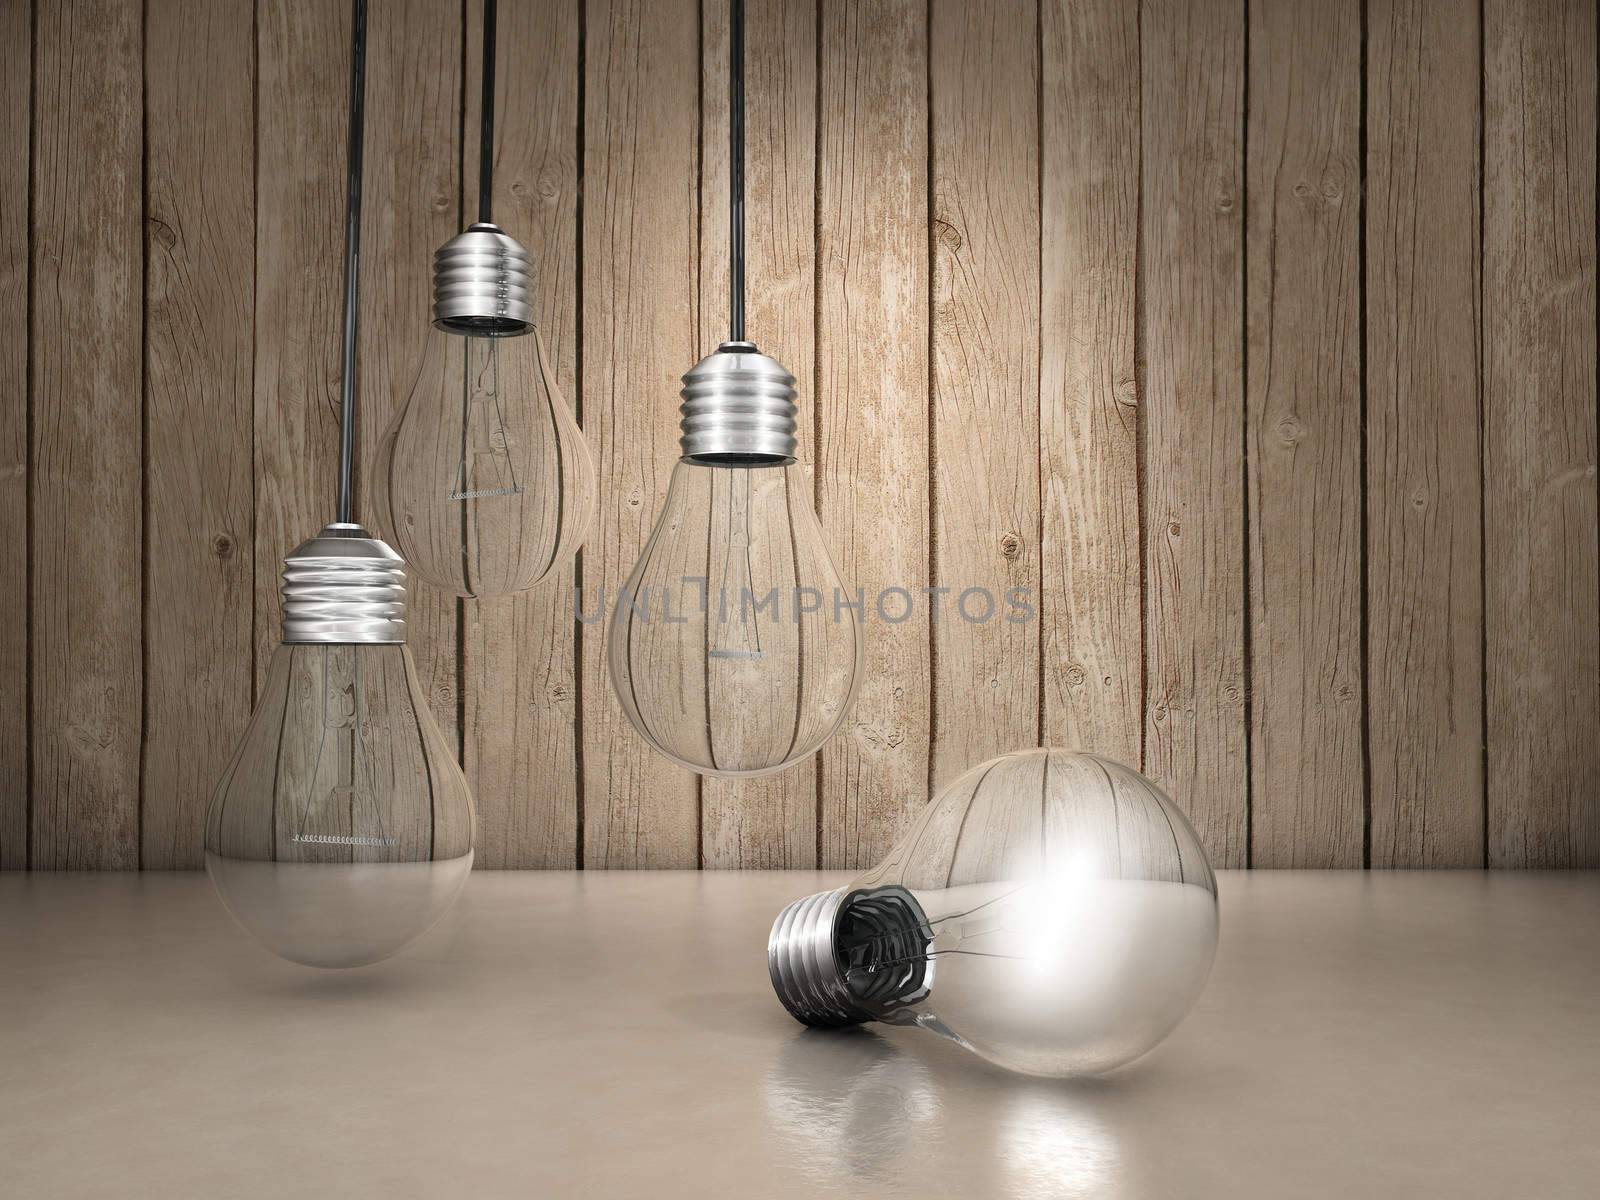 Light bulbs by dynamicfoto